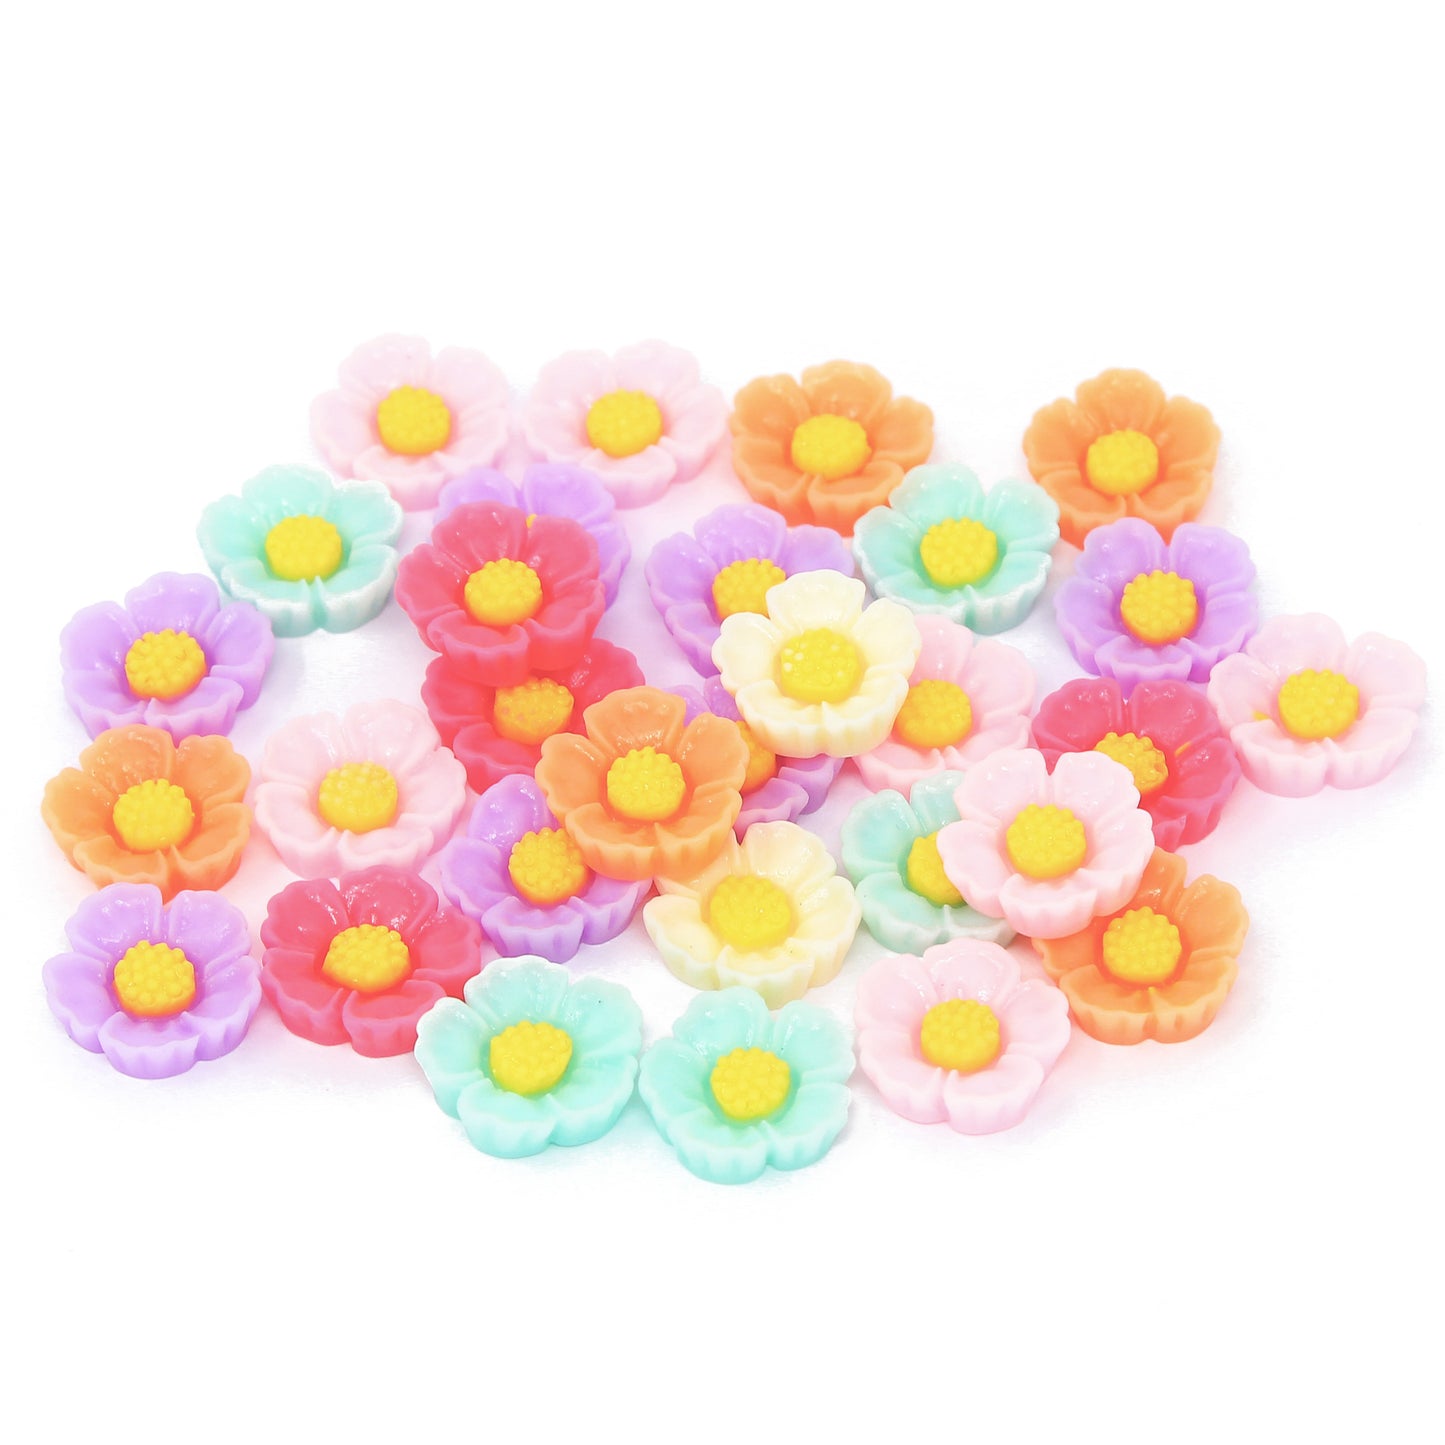 30 Mix Pastel 17mm Waterlily Flower Resin Flatbacks